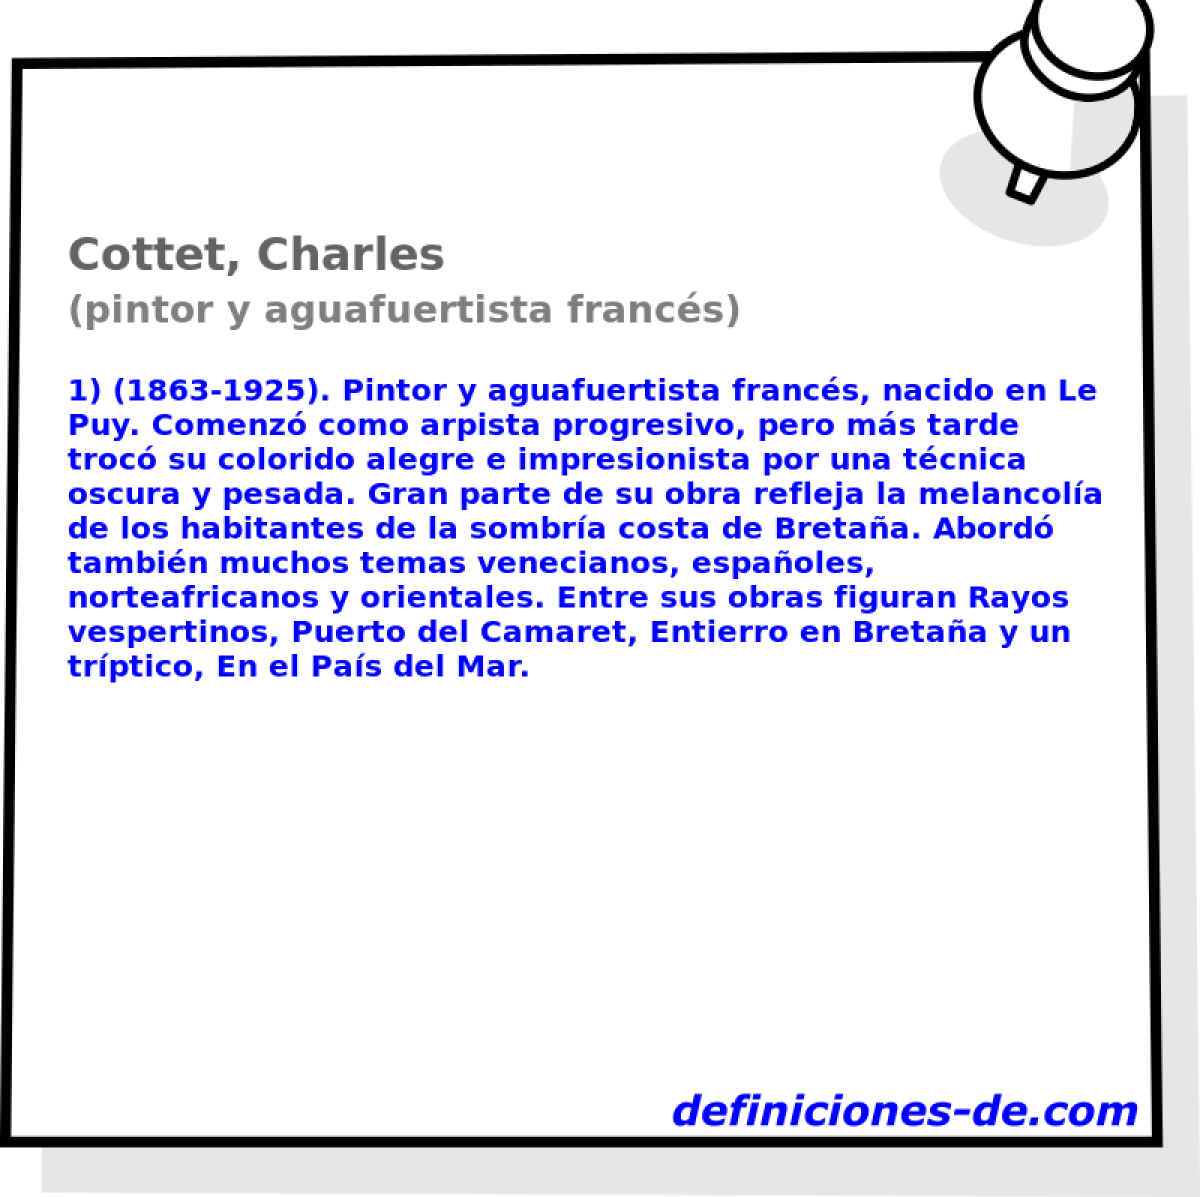 Cottet, Charles (pintor y aguafuertista francs)